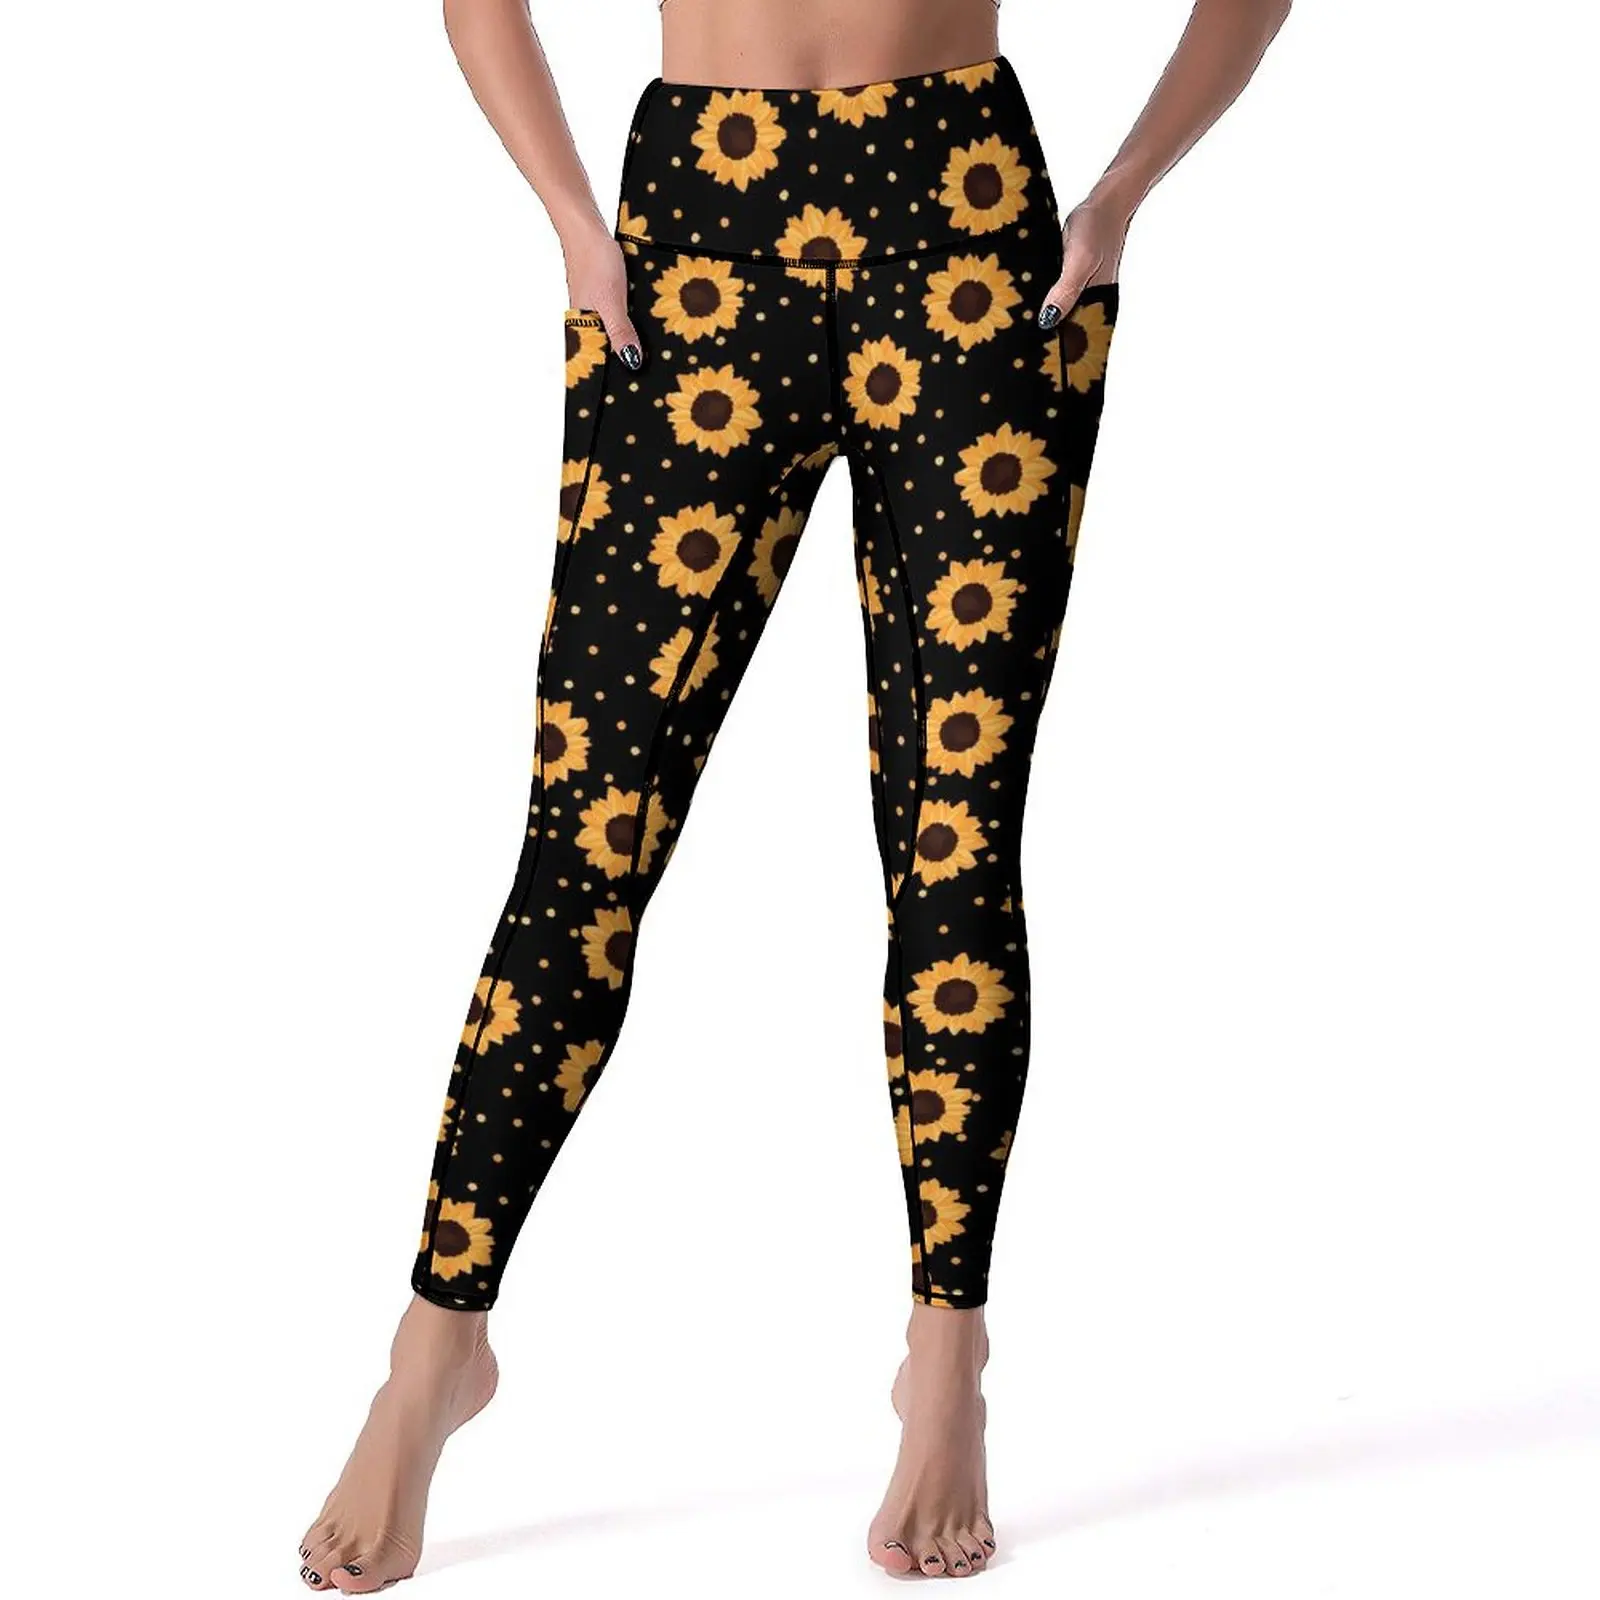 

Sunflower Leggings Polka Dots Fitness Gym Yoga Pants Push Up Cute Leggins Quick-Dry Graphic Sports Tights XL XXL